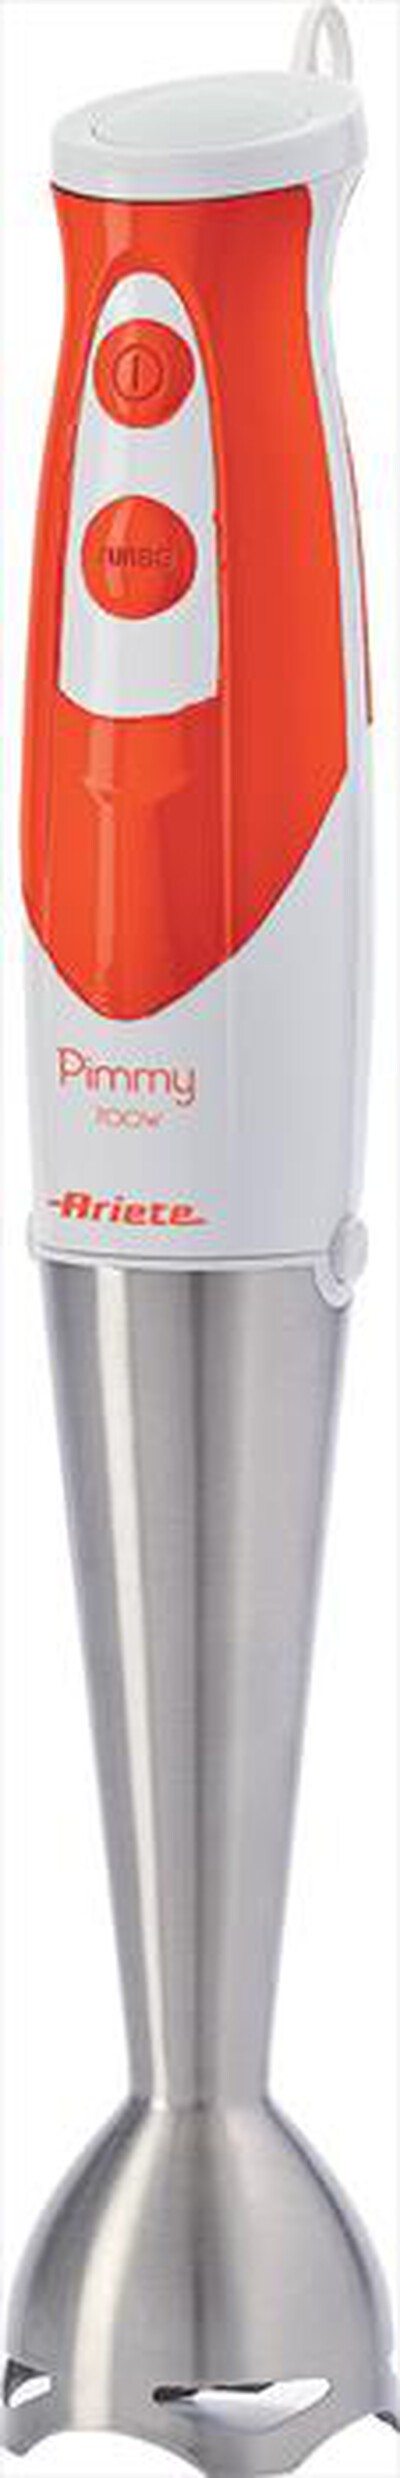 ARIETE - Pimmy / 887-bianco arancione